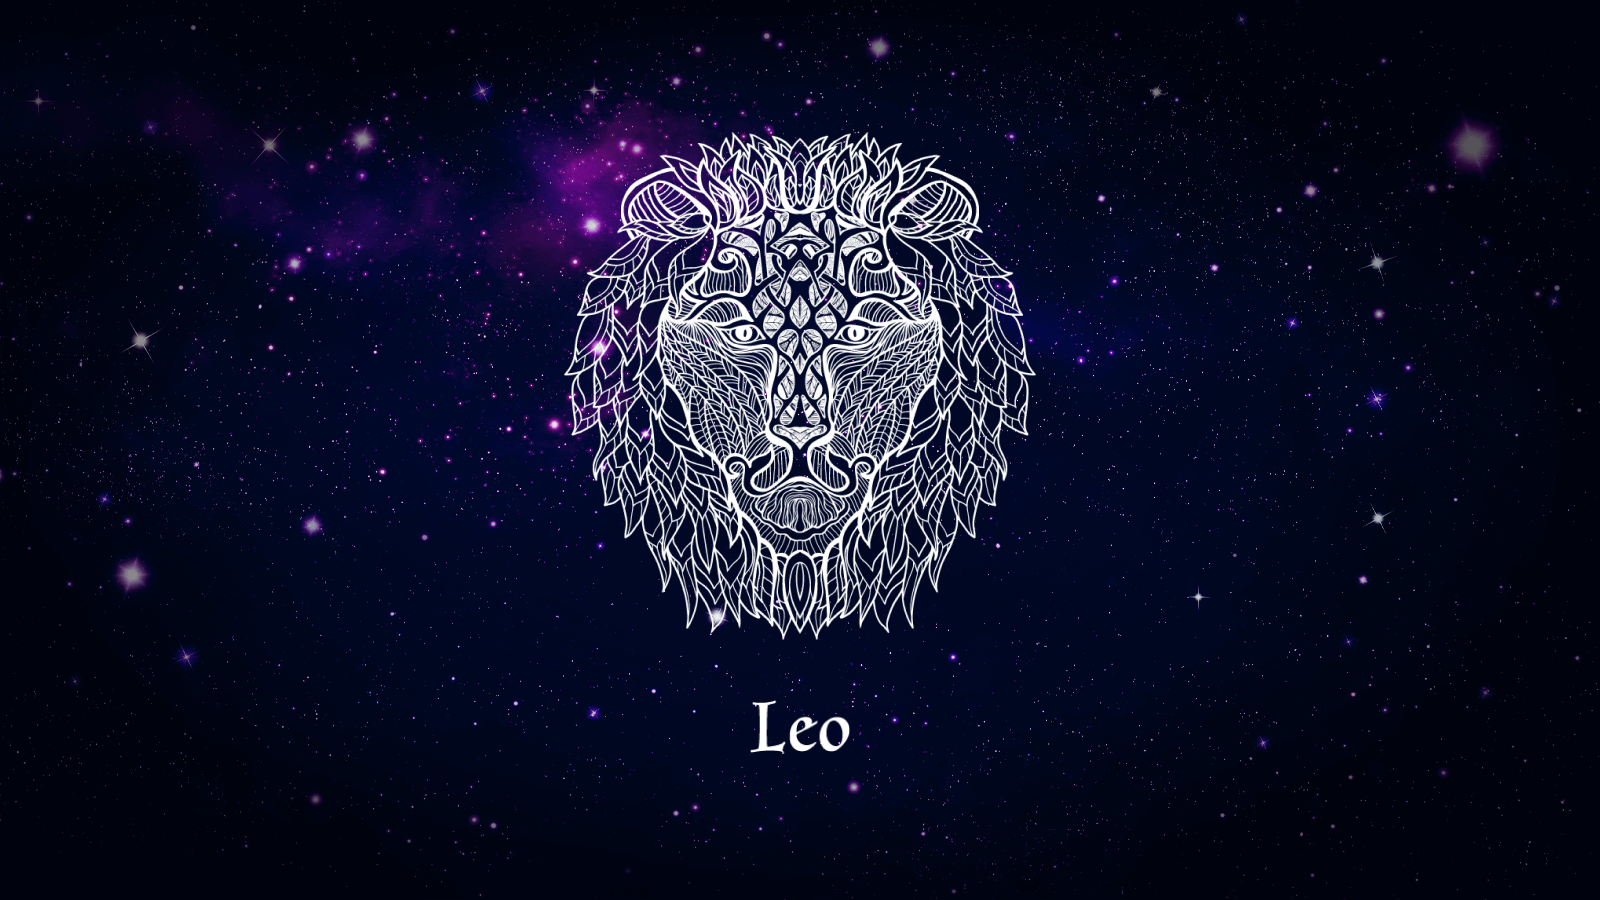 Wallpaper Leo Lion zodiac sign horoscope images for desktop section  минимализм  download